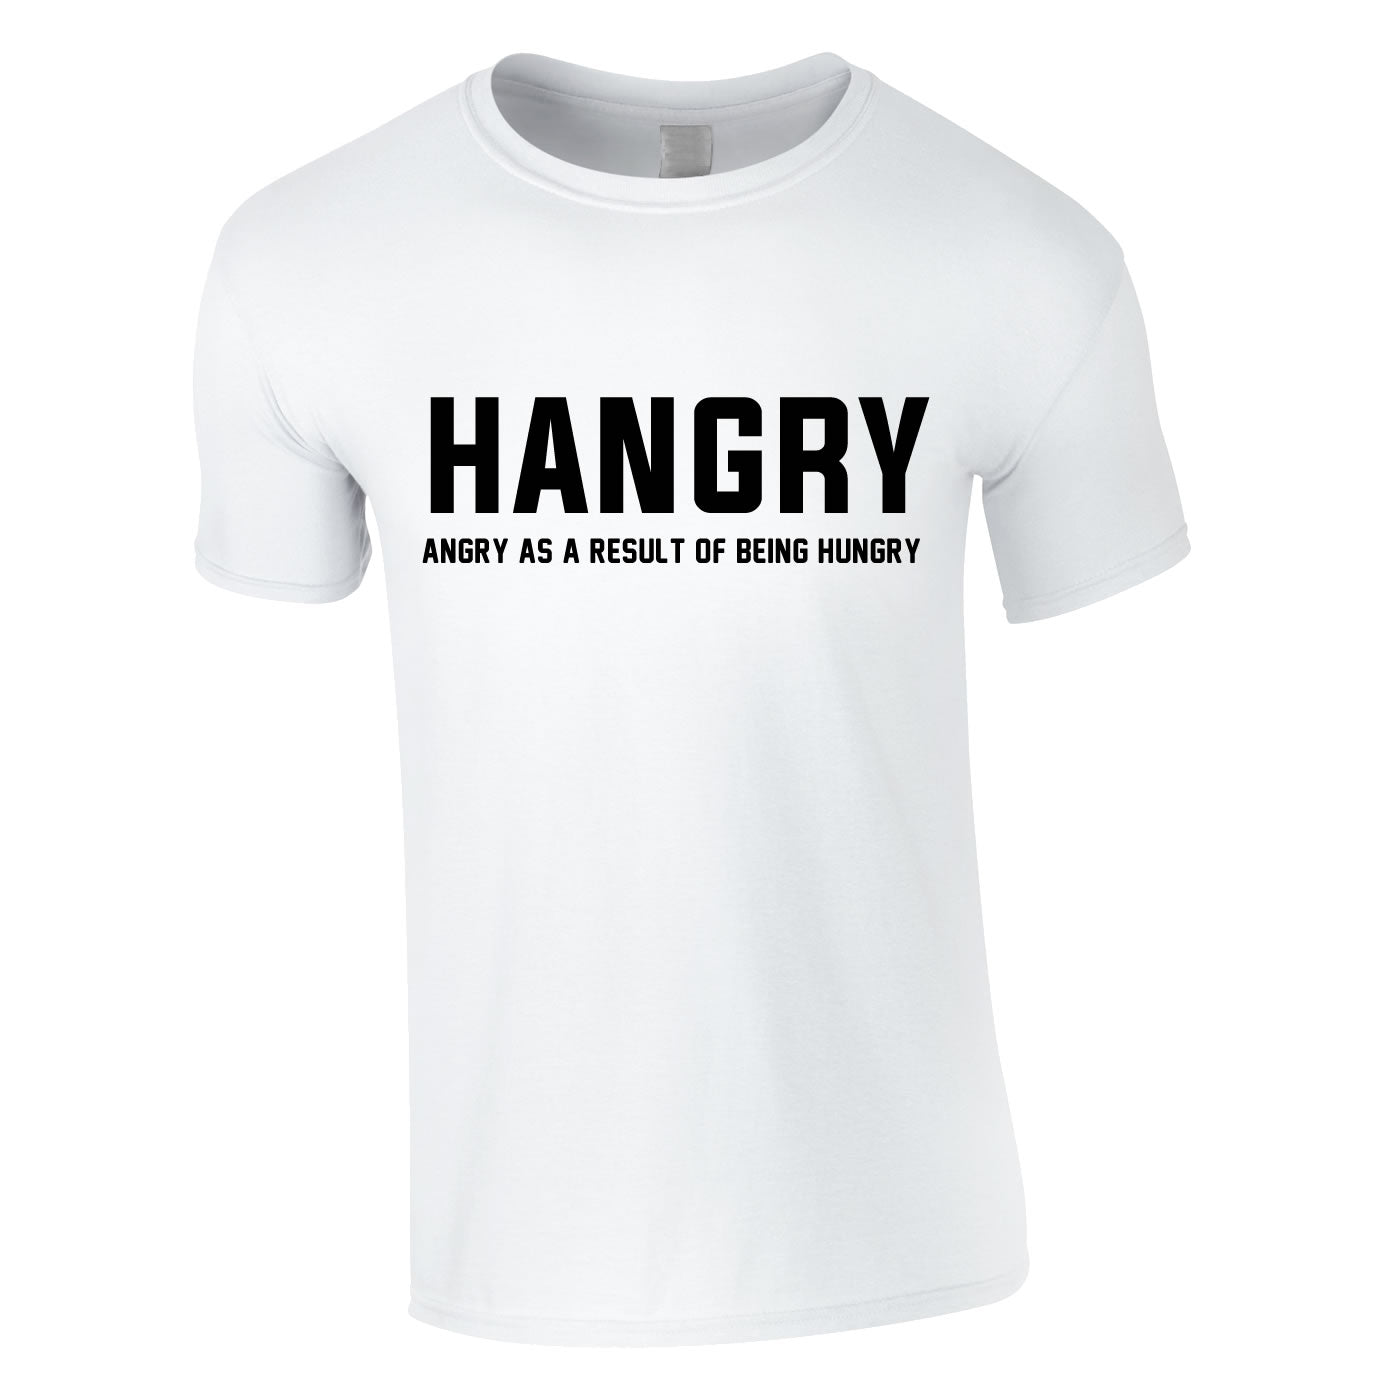 Hangry T Shirt